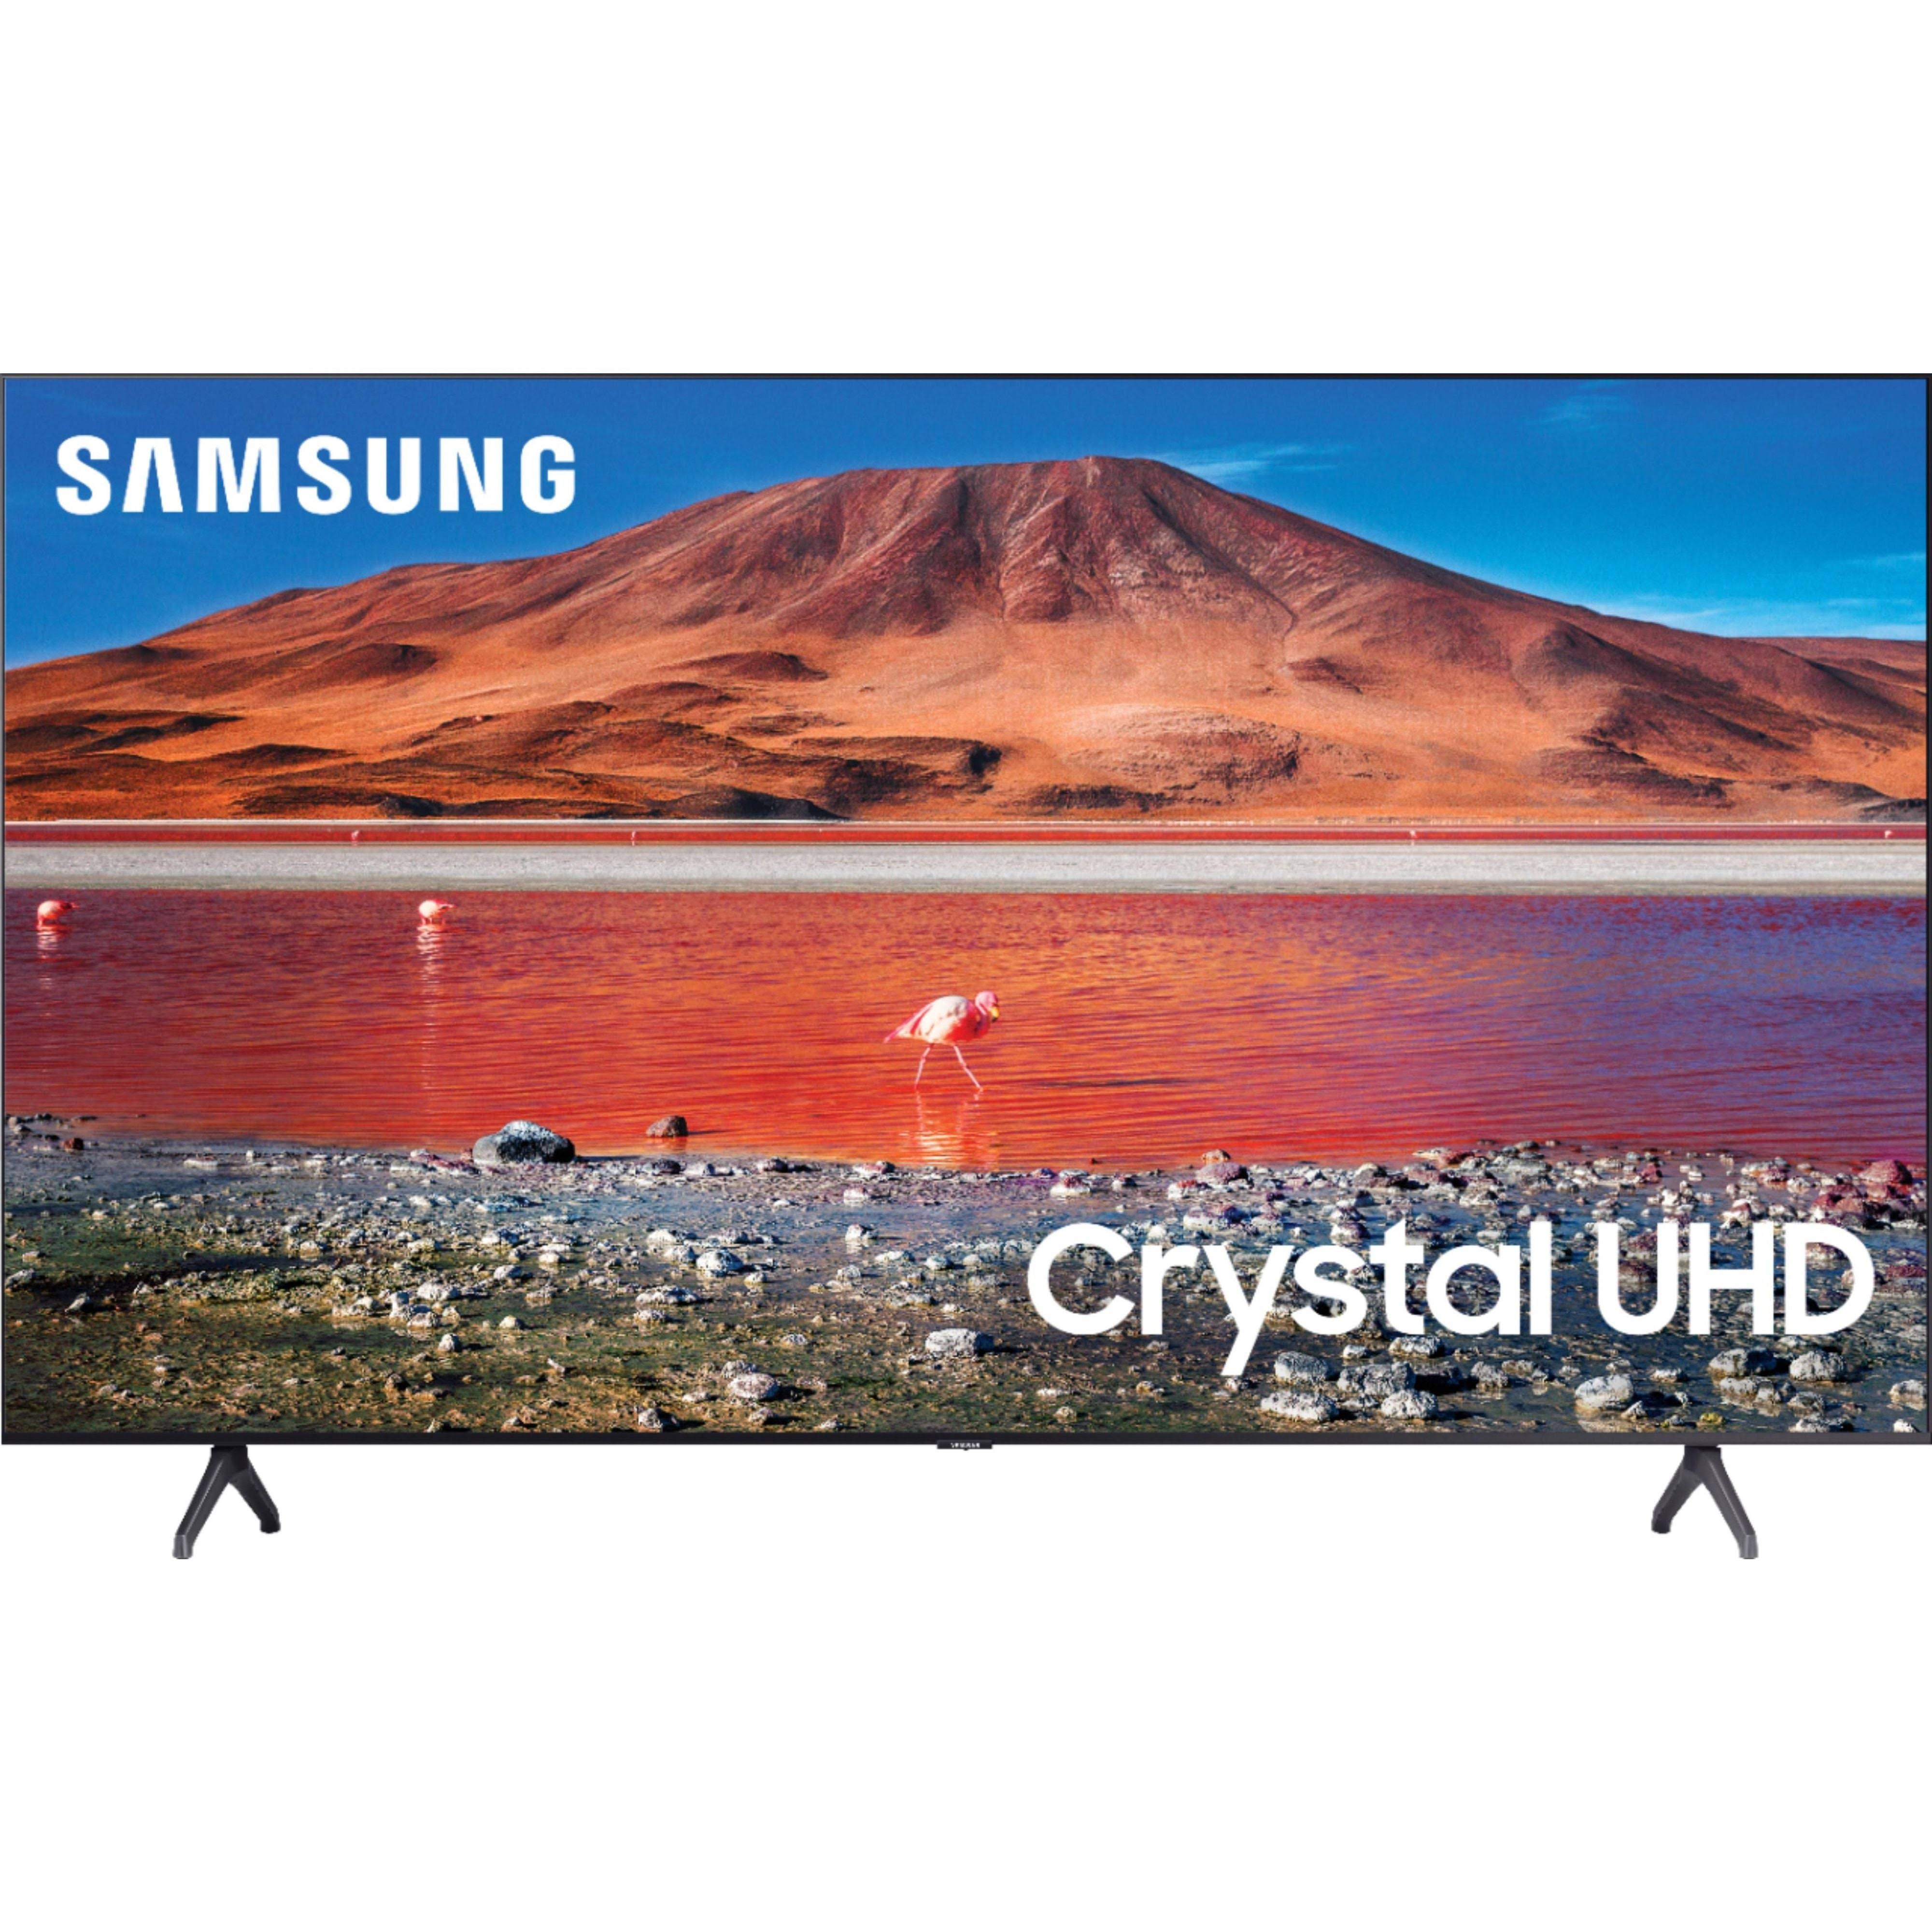 Samsung UN50TU7000FXZA/BXZA 50" Class 7 Series LED 4K UHD Smart Tizen TV